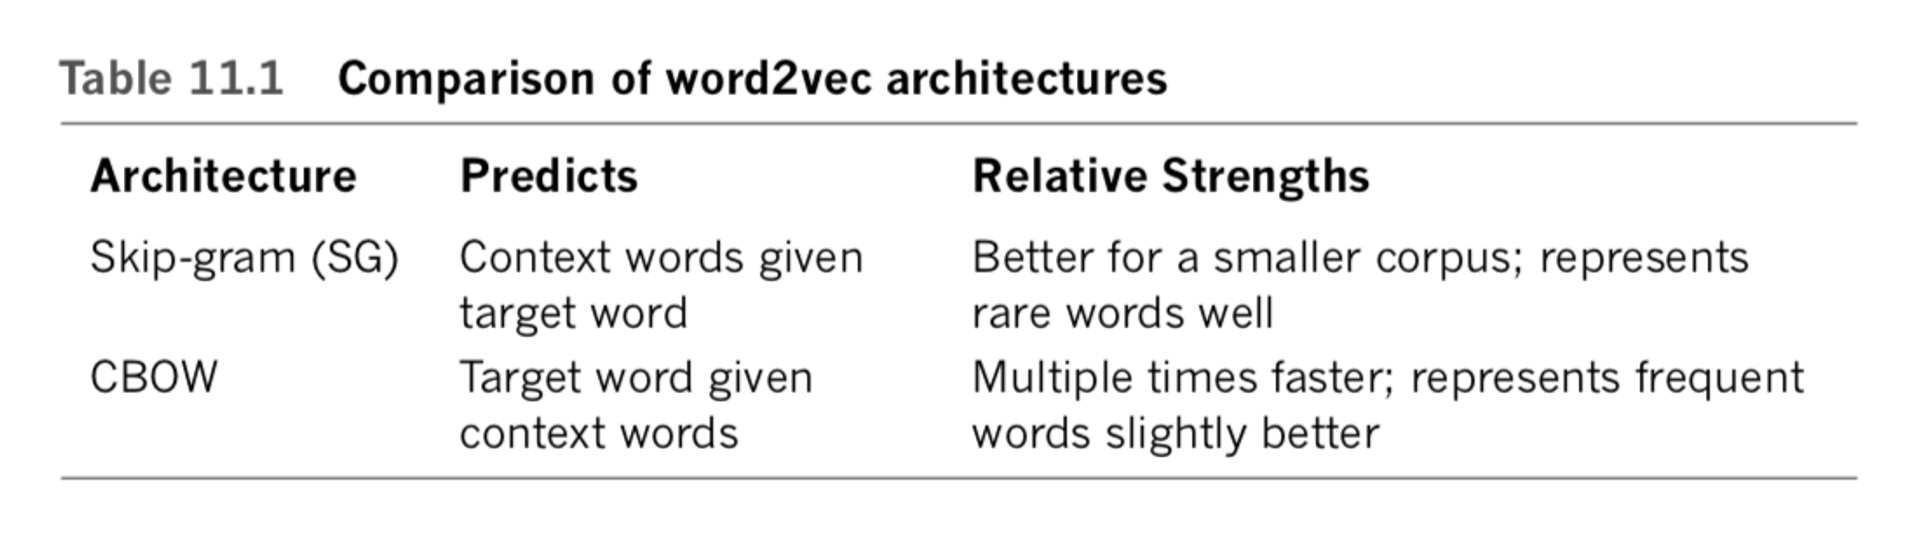 Comparison of word2vec architectures